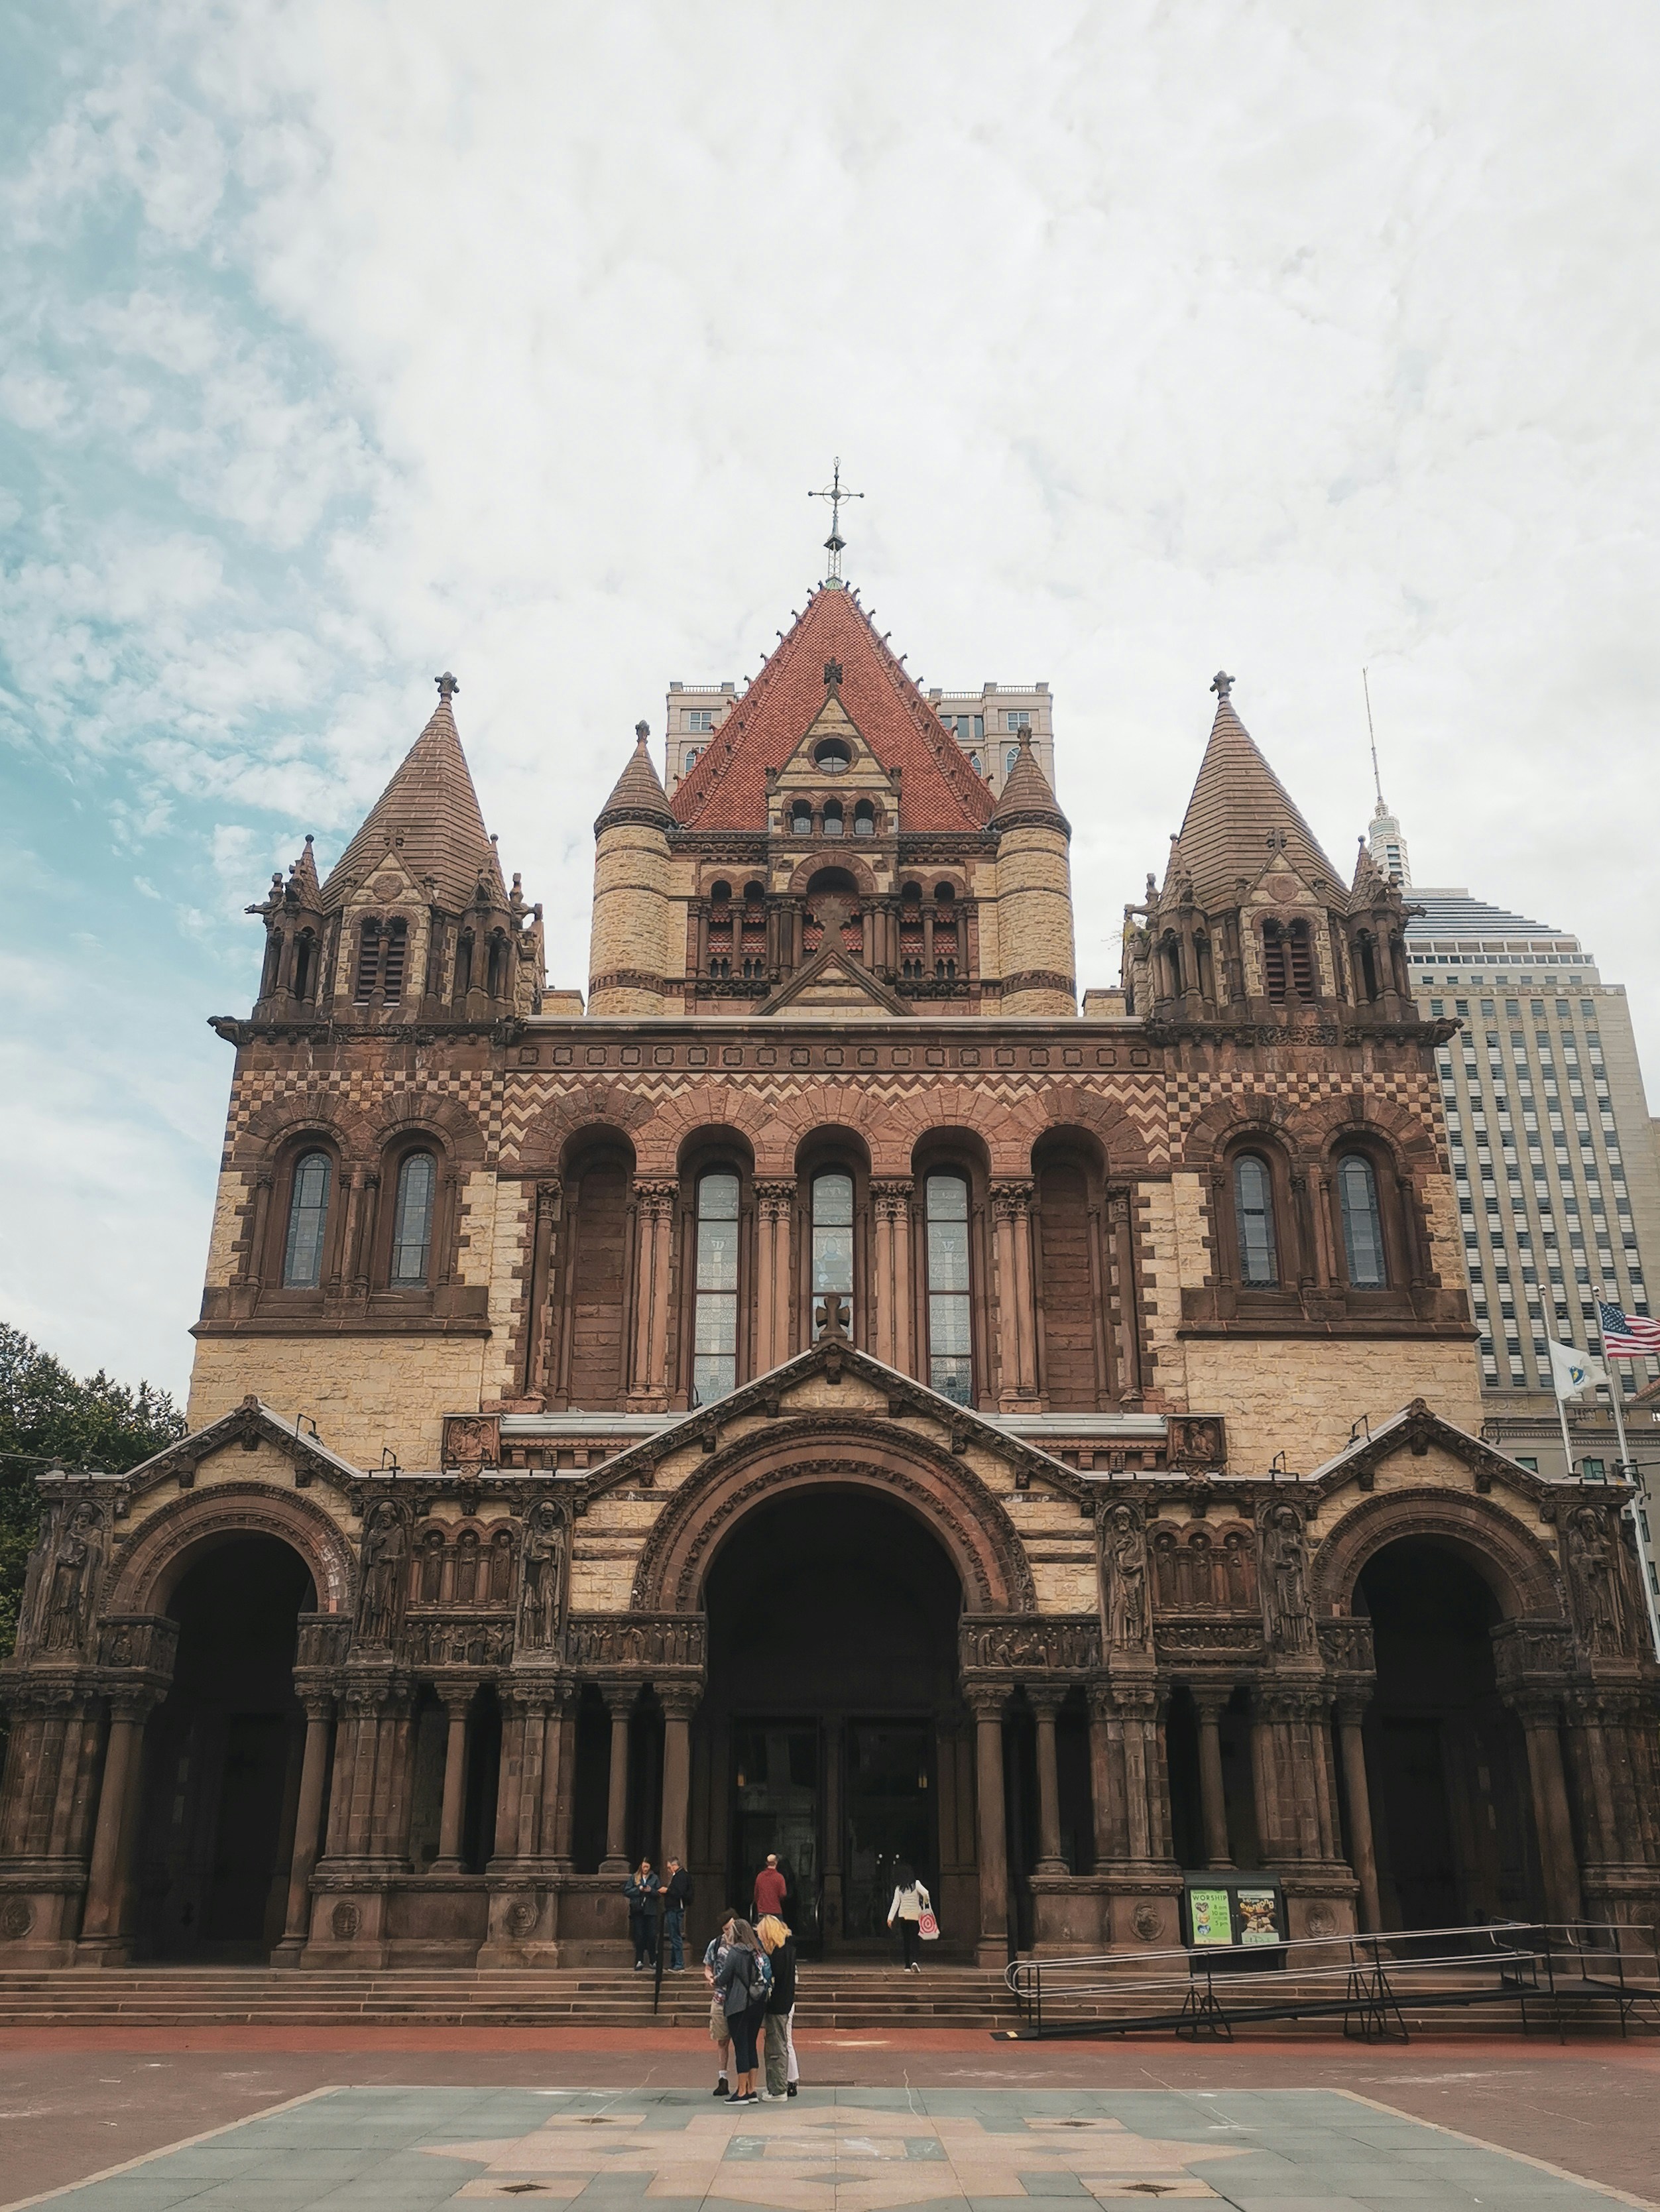 Trinity Church in Boston